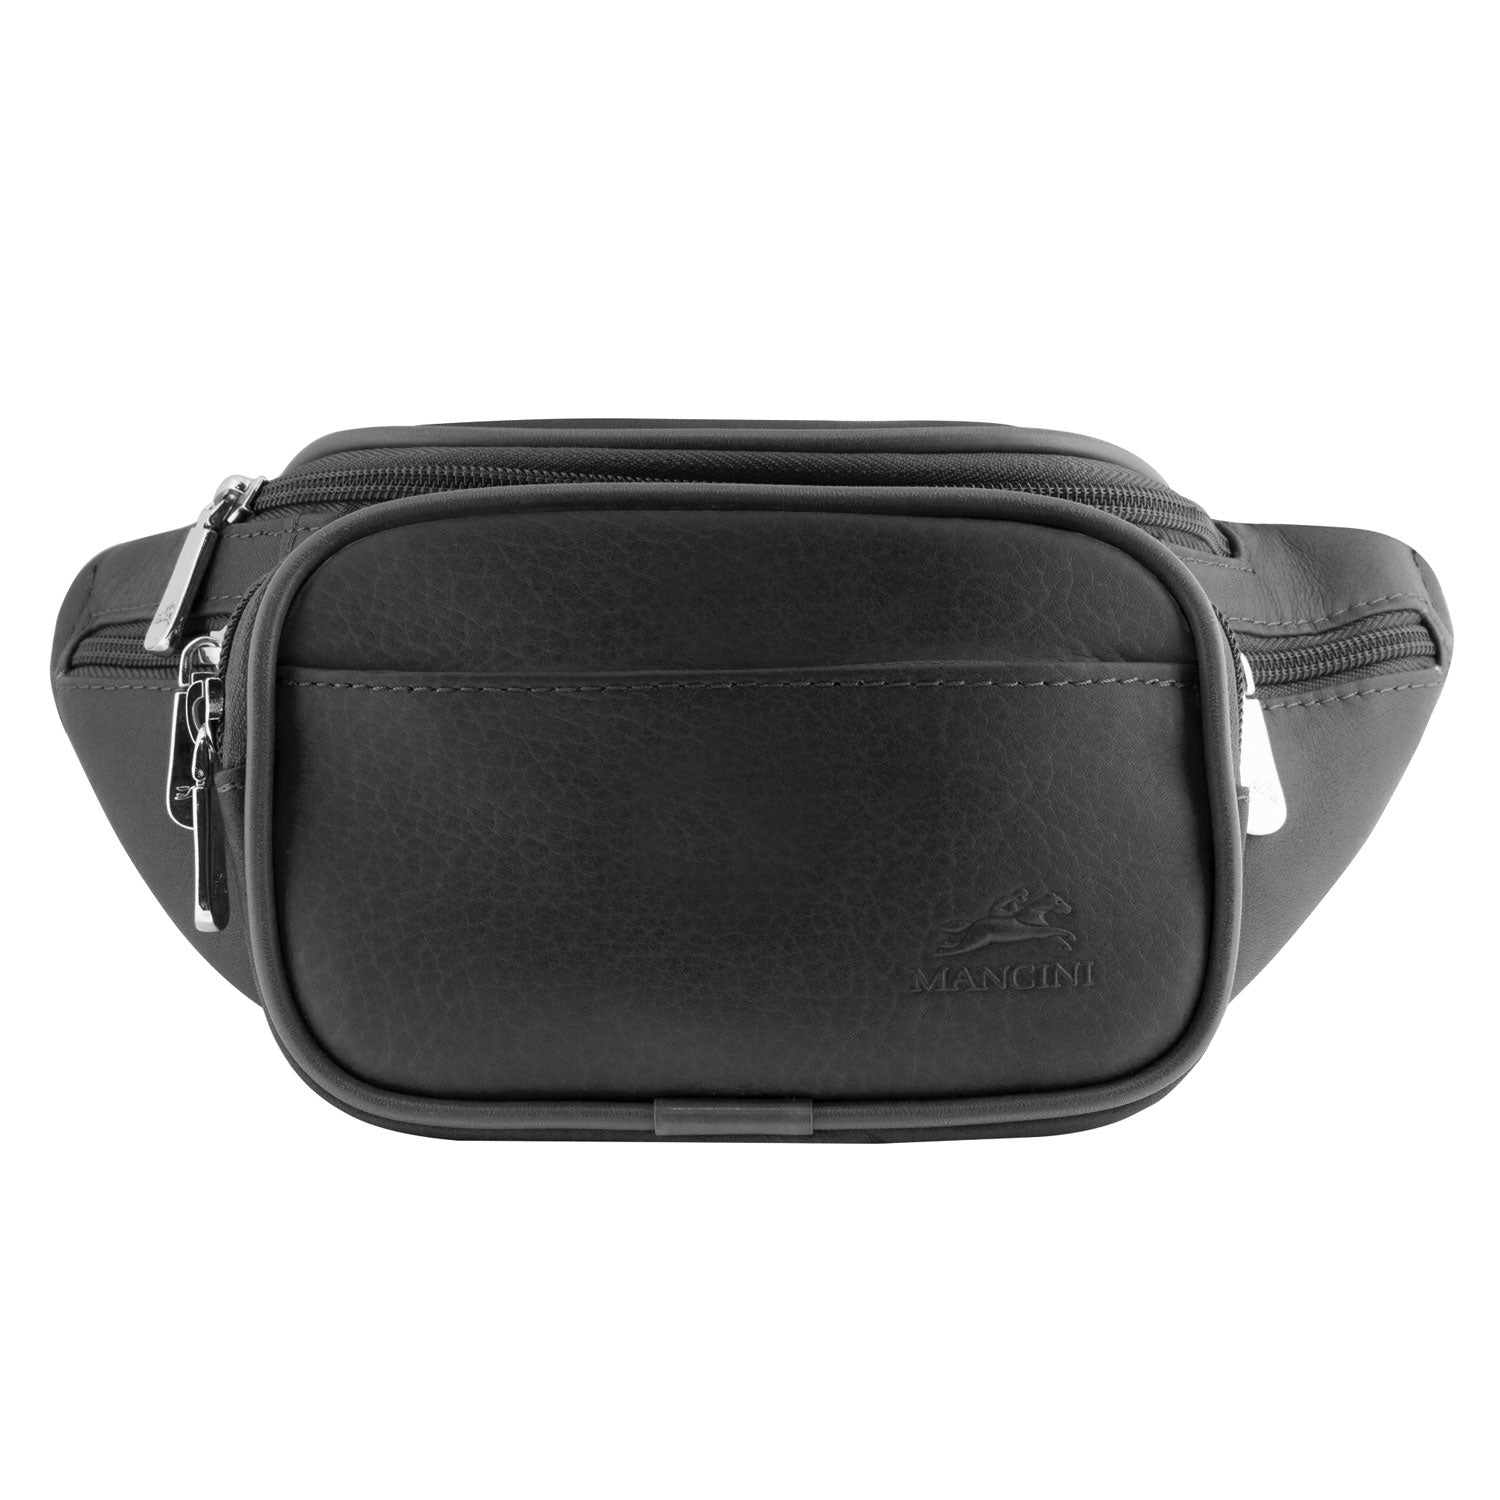 Mancini Leather Classic Waist Bag, 12" x 4" x 5.5", Black